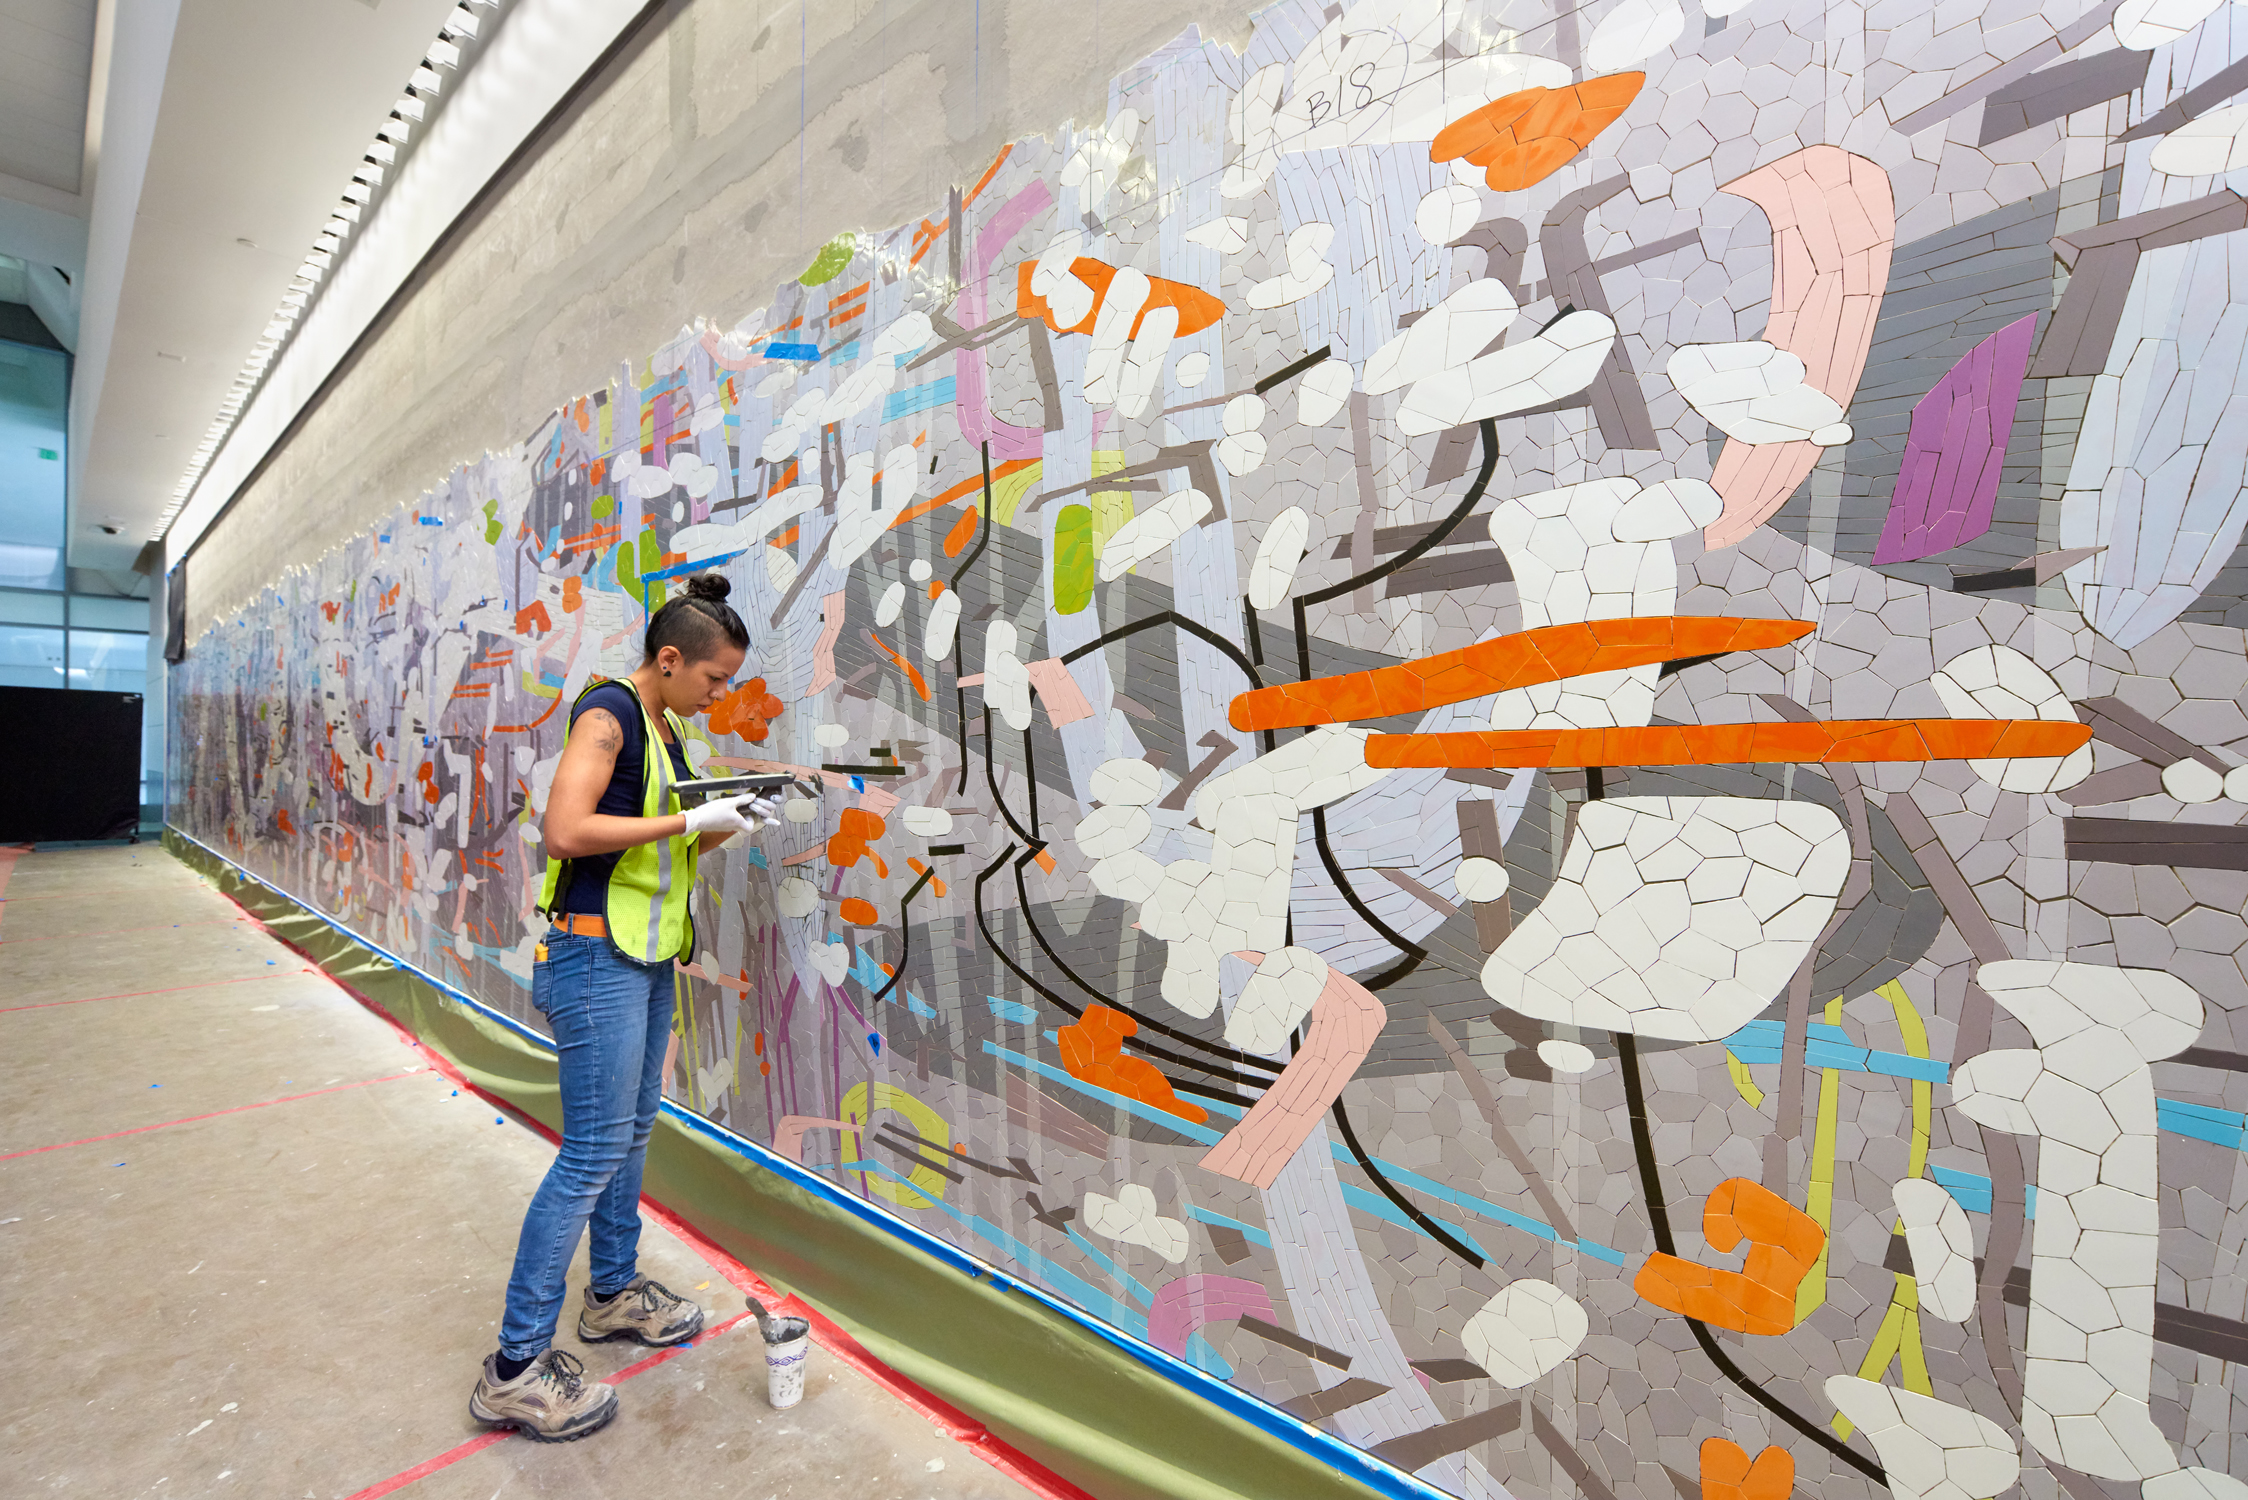   Untitled (Large Variation),  2015 Ceramic mosaic; installation process 10 x 109 feet San Francisco International Airport 